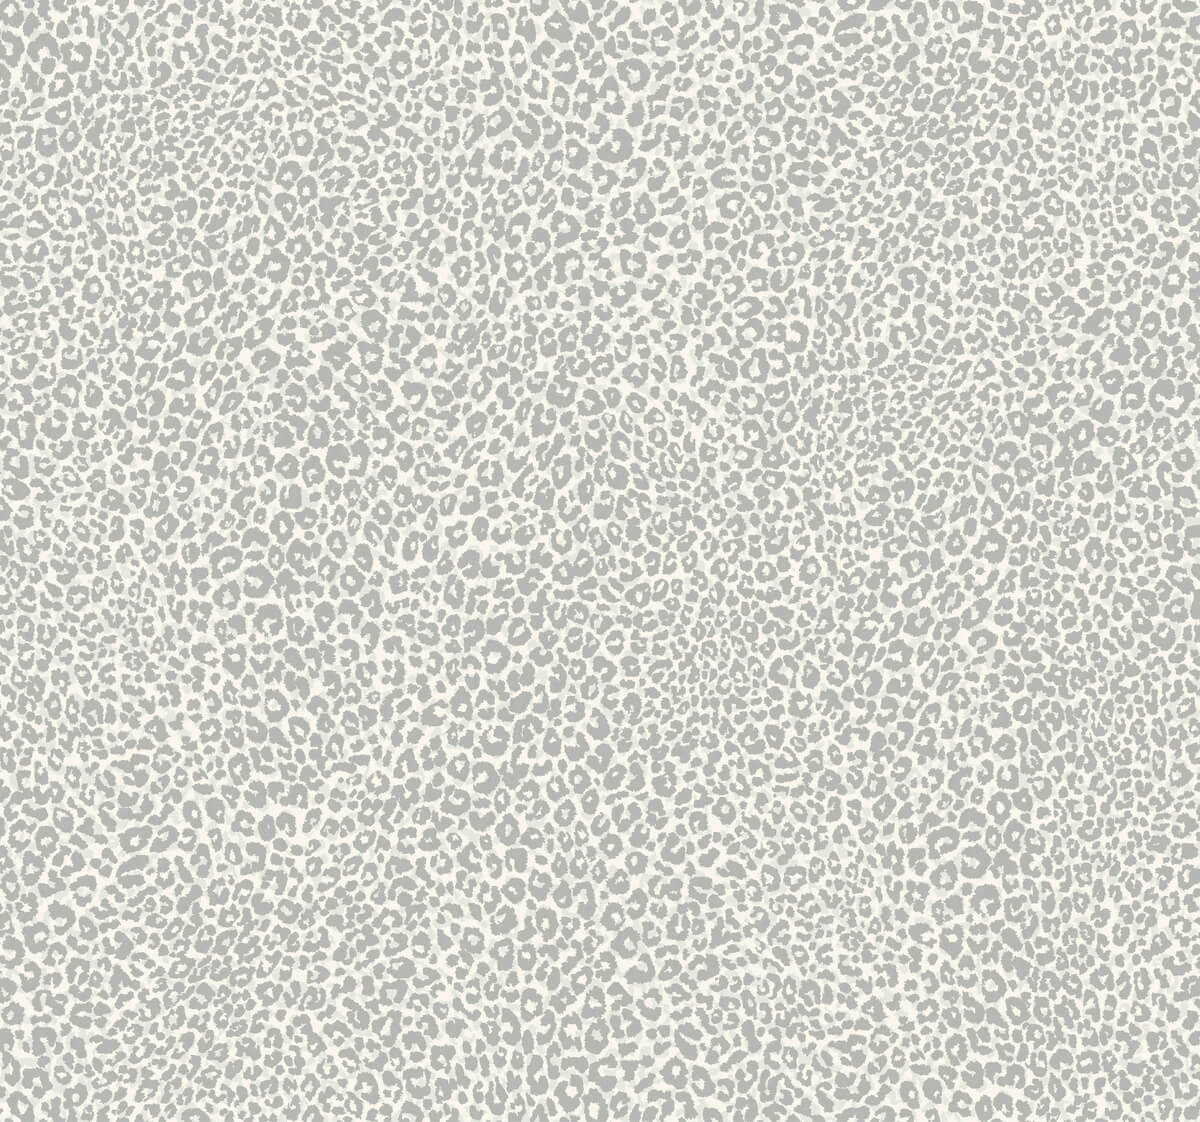 Tropics Resource Library Leopard King Wallpaper - Gray